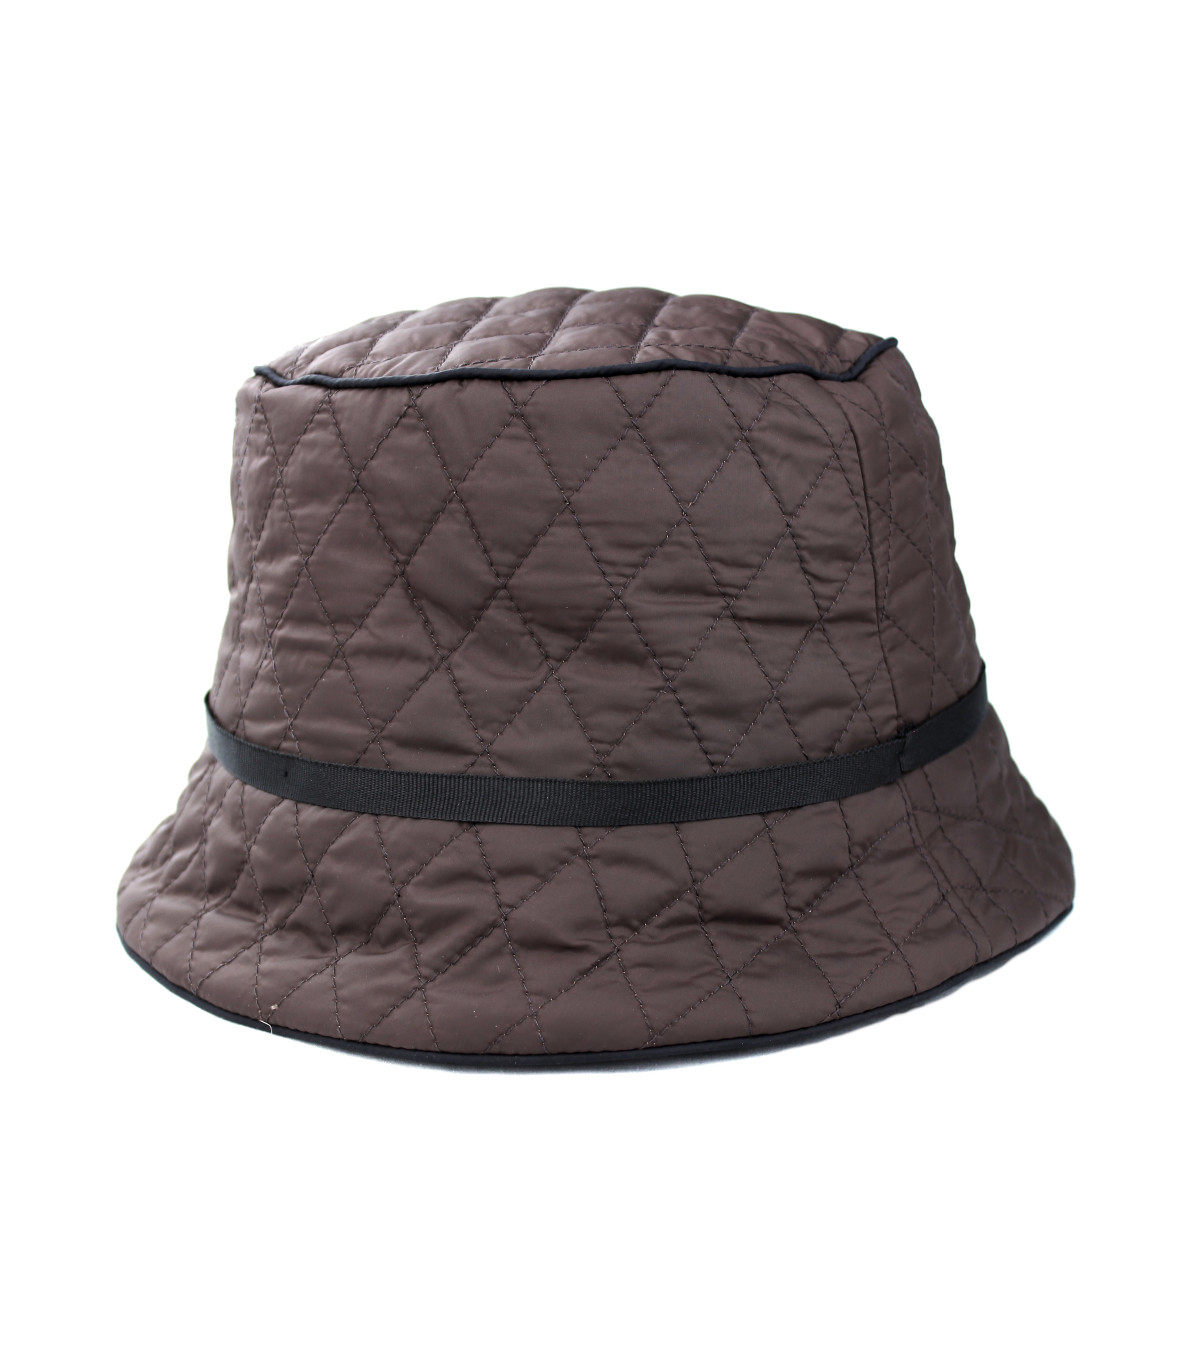 WATERPROOF HAT LADY - Waterproof Hats - Materials for headdresses